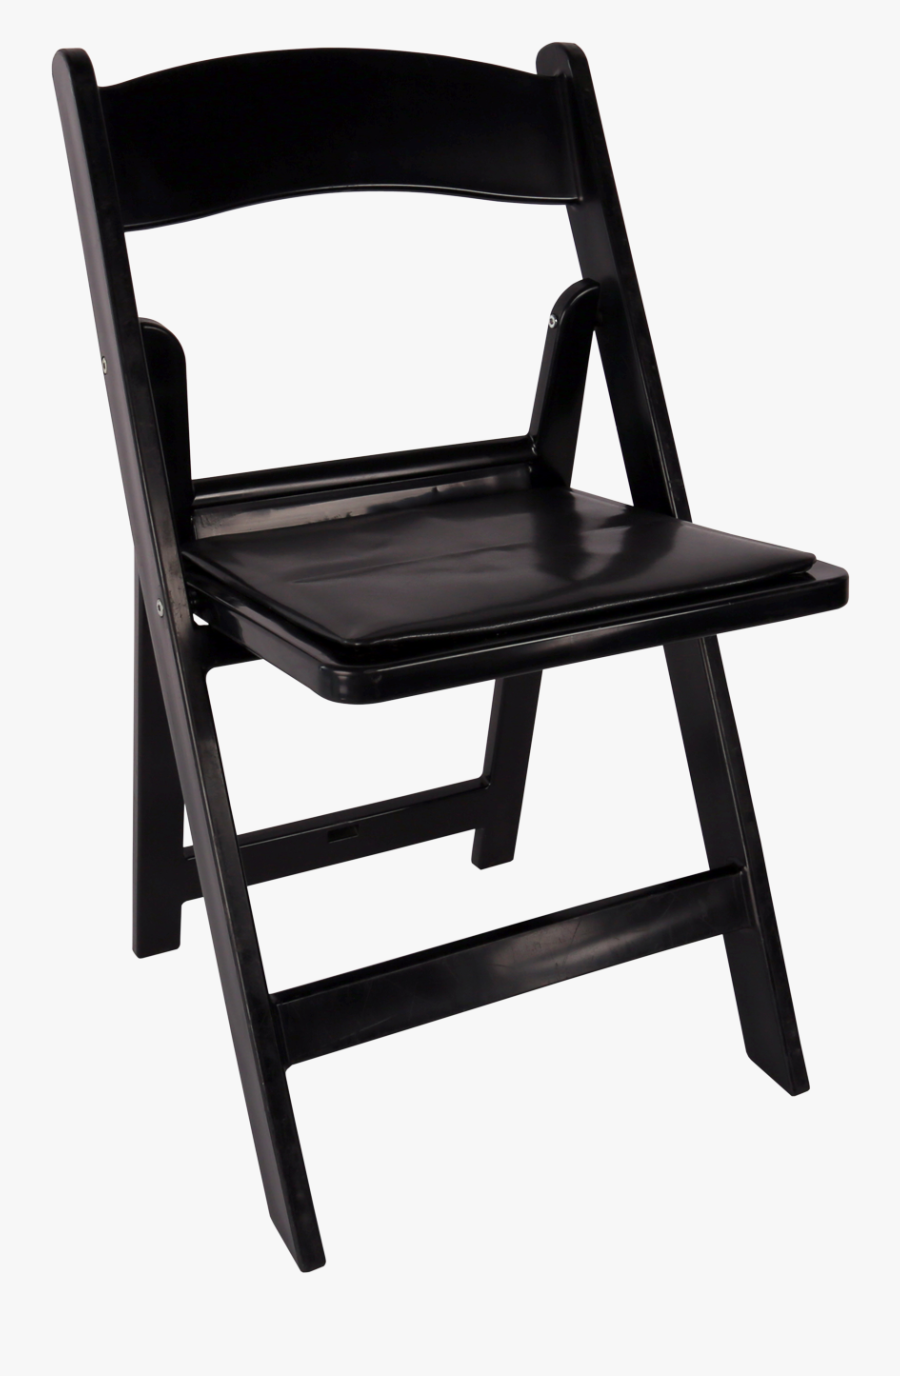 Black Padded Folding Chairs Fresh Chair Black Resin - Black Resin Folding Chair, Transparent Clipart